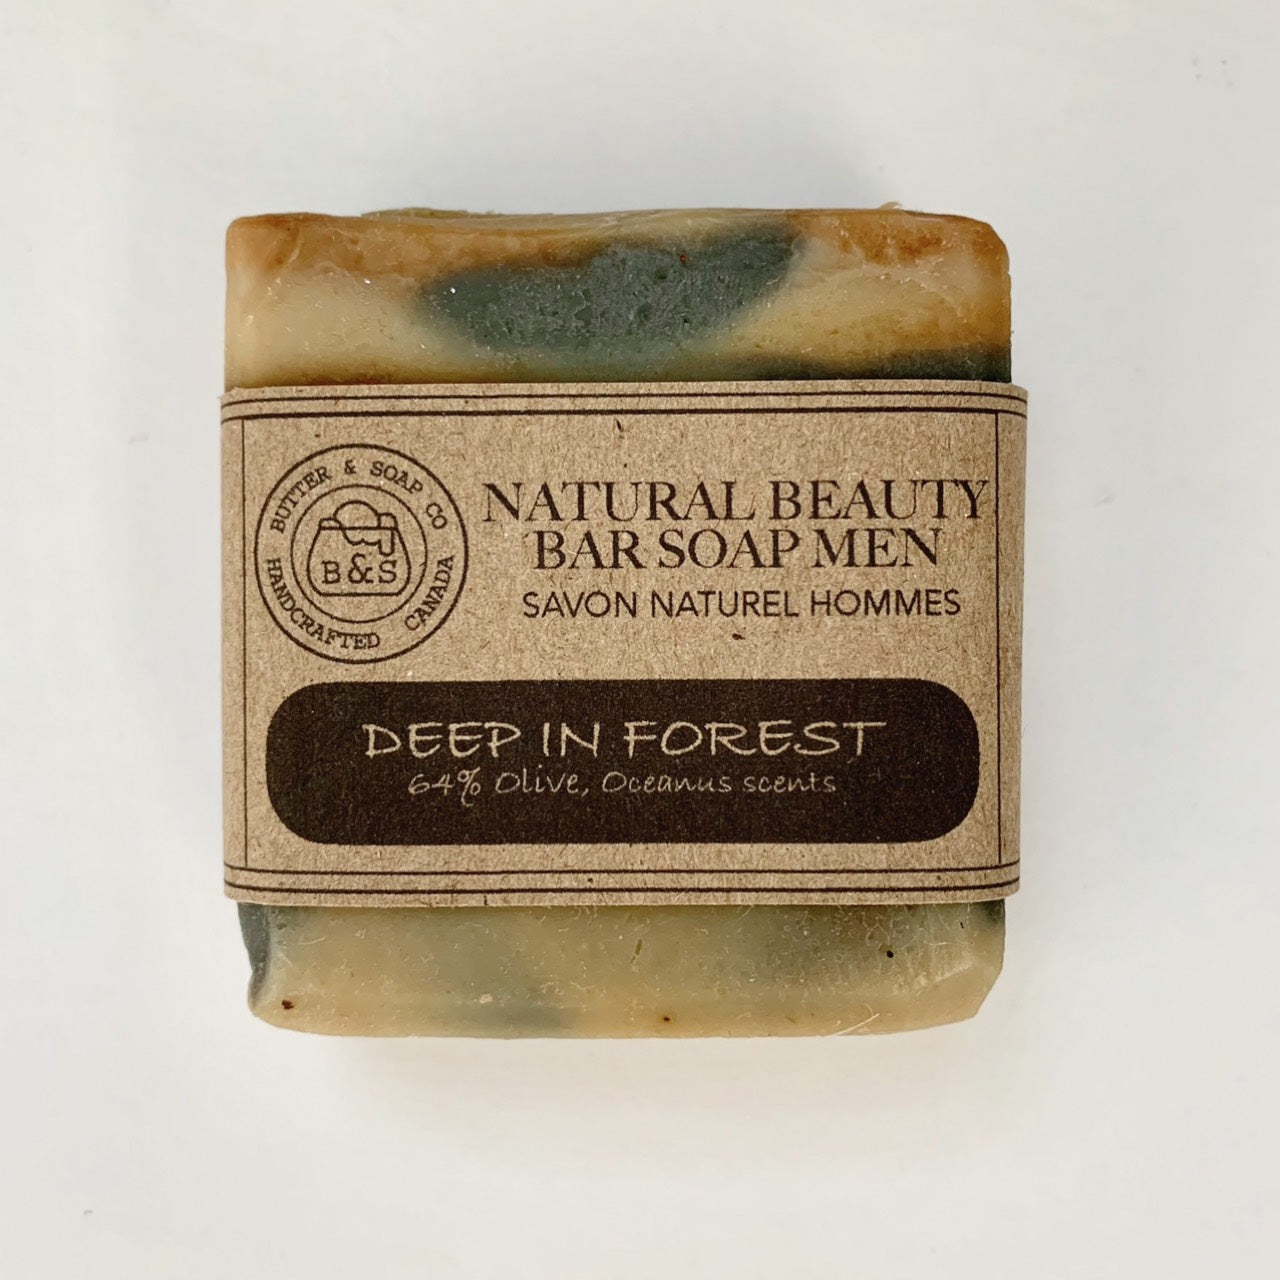 Natural Soap Bar for Men "Deep in Forest"